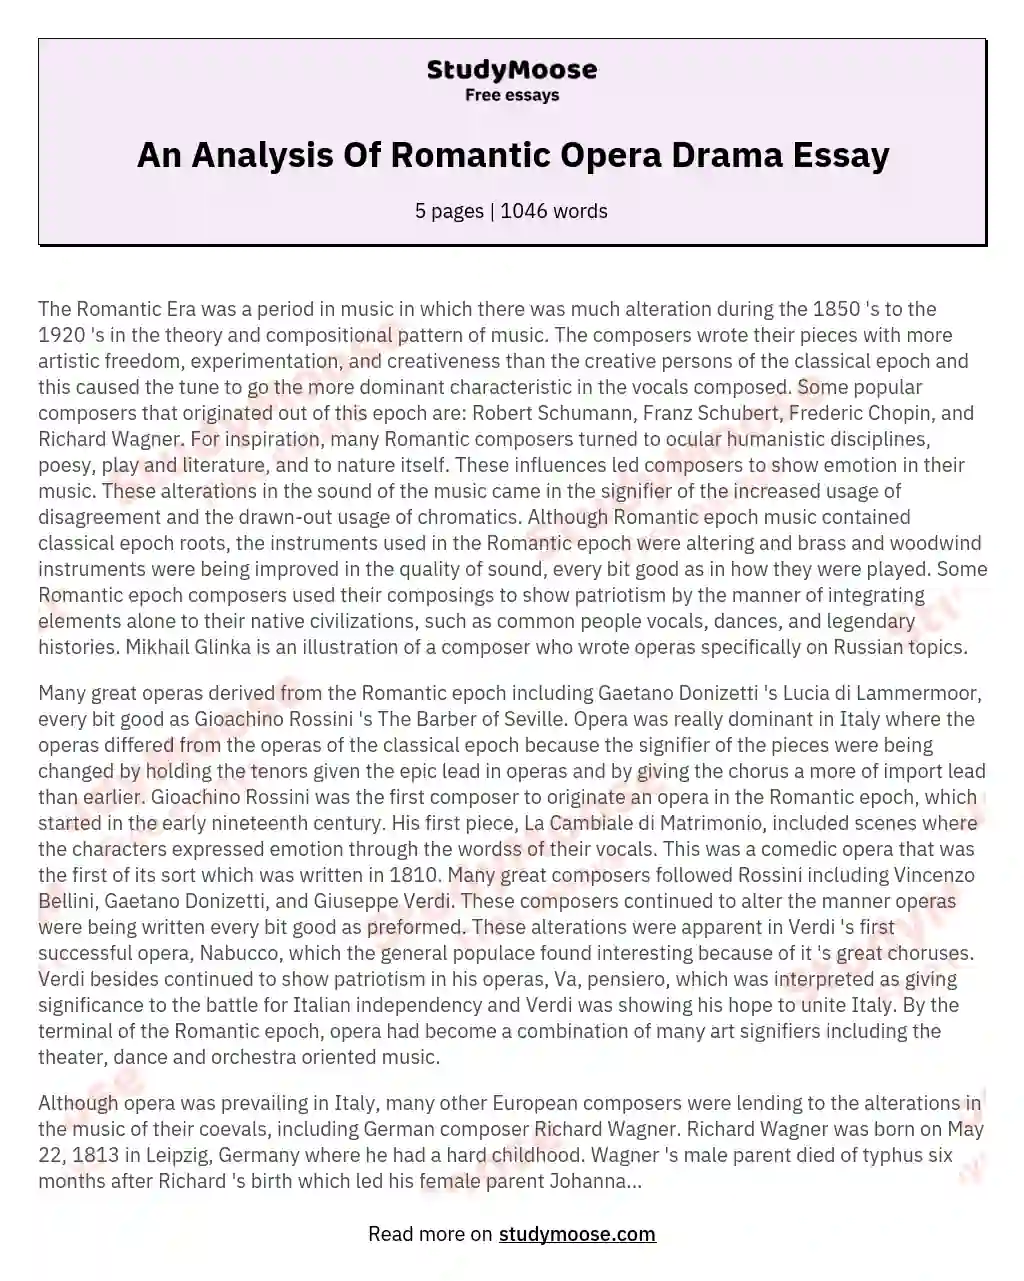 An Analysis Of Romantic Opera Drama Essay